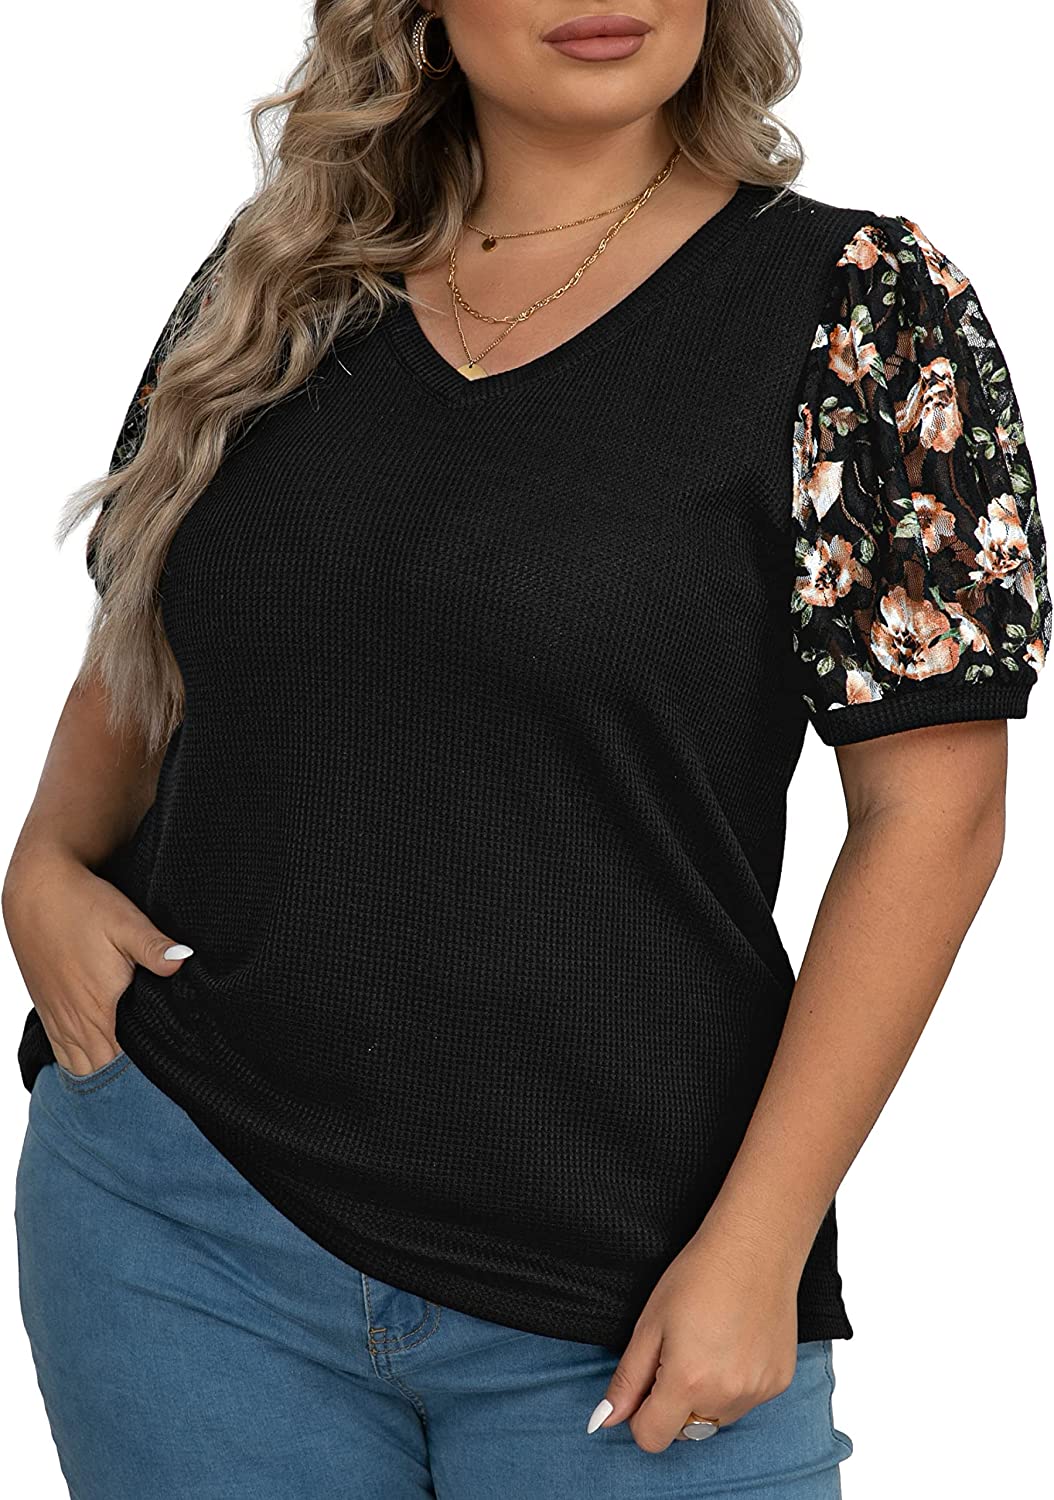 OLRIK Plus Size Tops for Women Summer Blouse Waffle Knit Short Lace Sleeve  Shirt